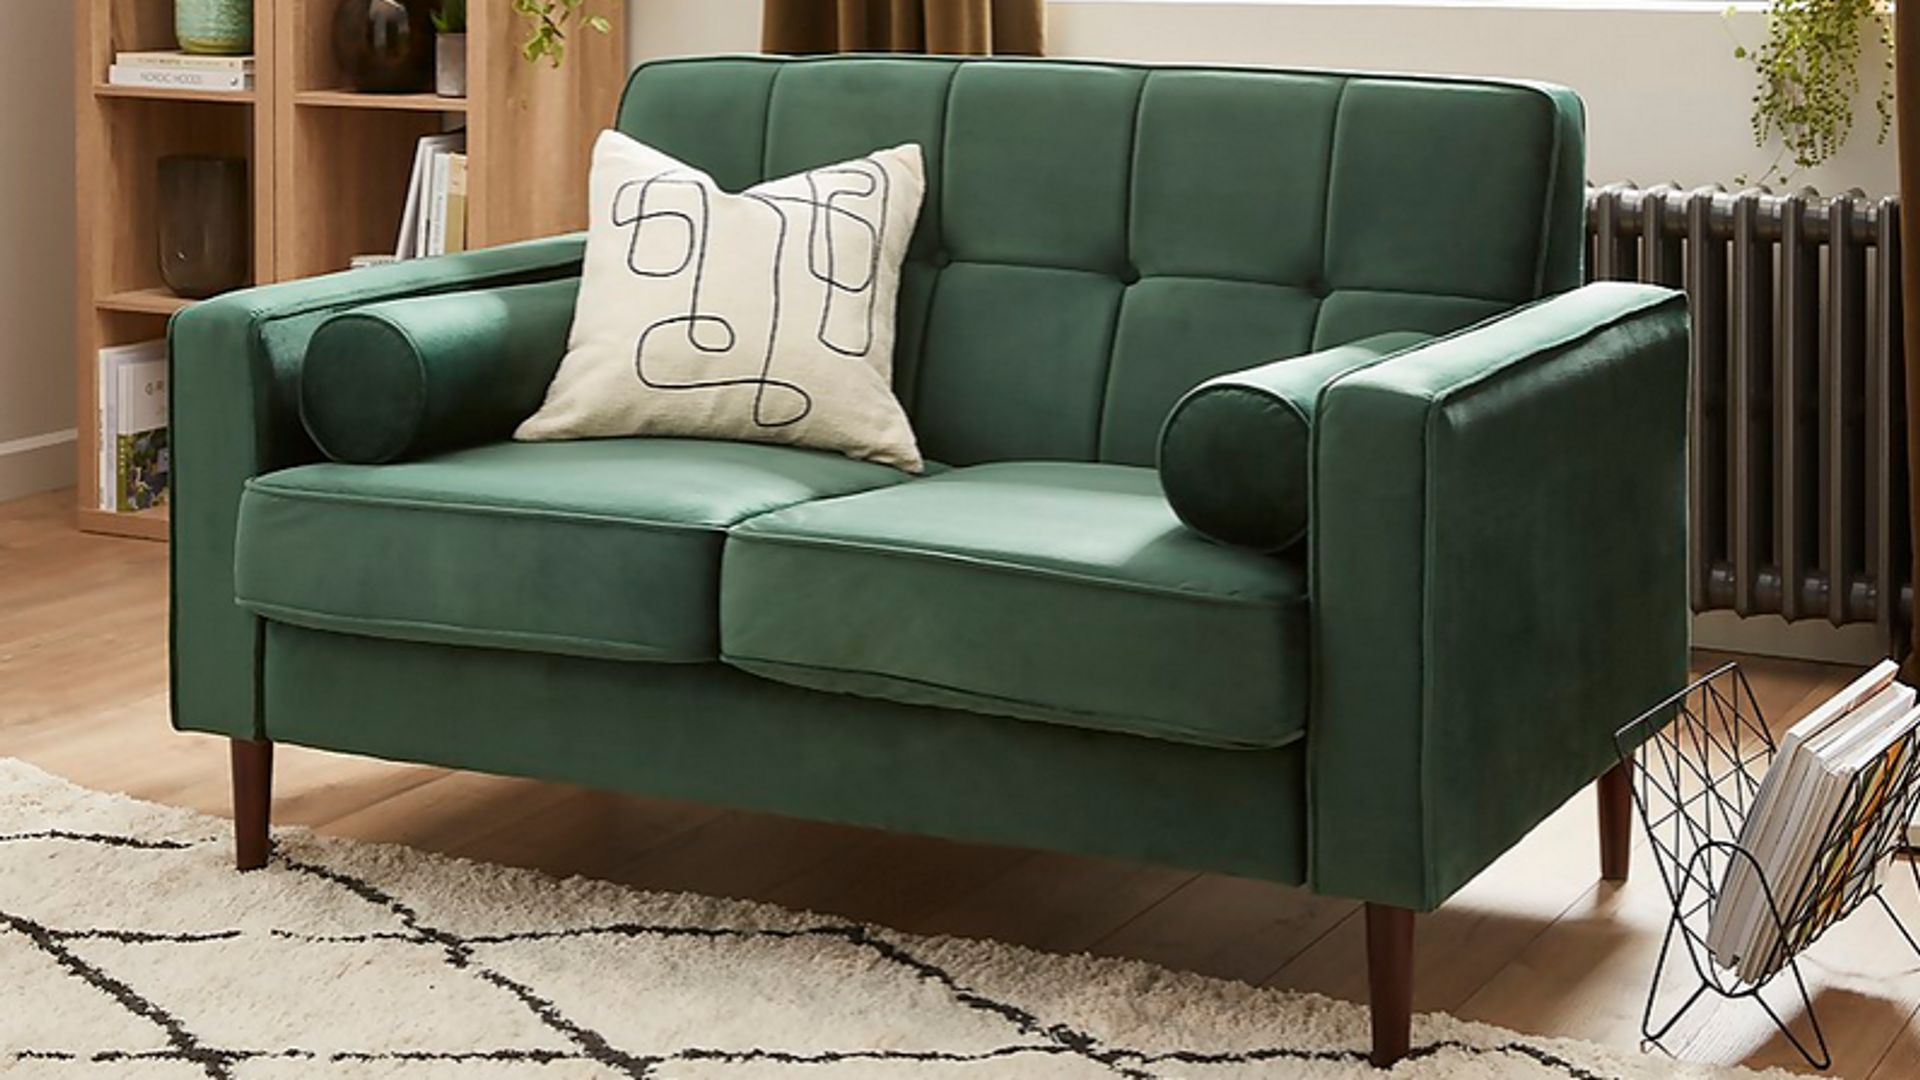 5 best sofa in a box companies: John Lewis, M&S, Argos & more